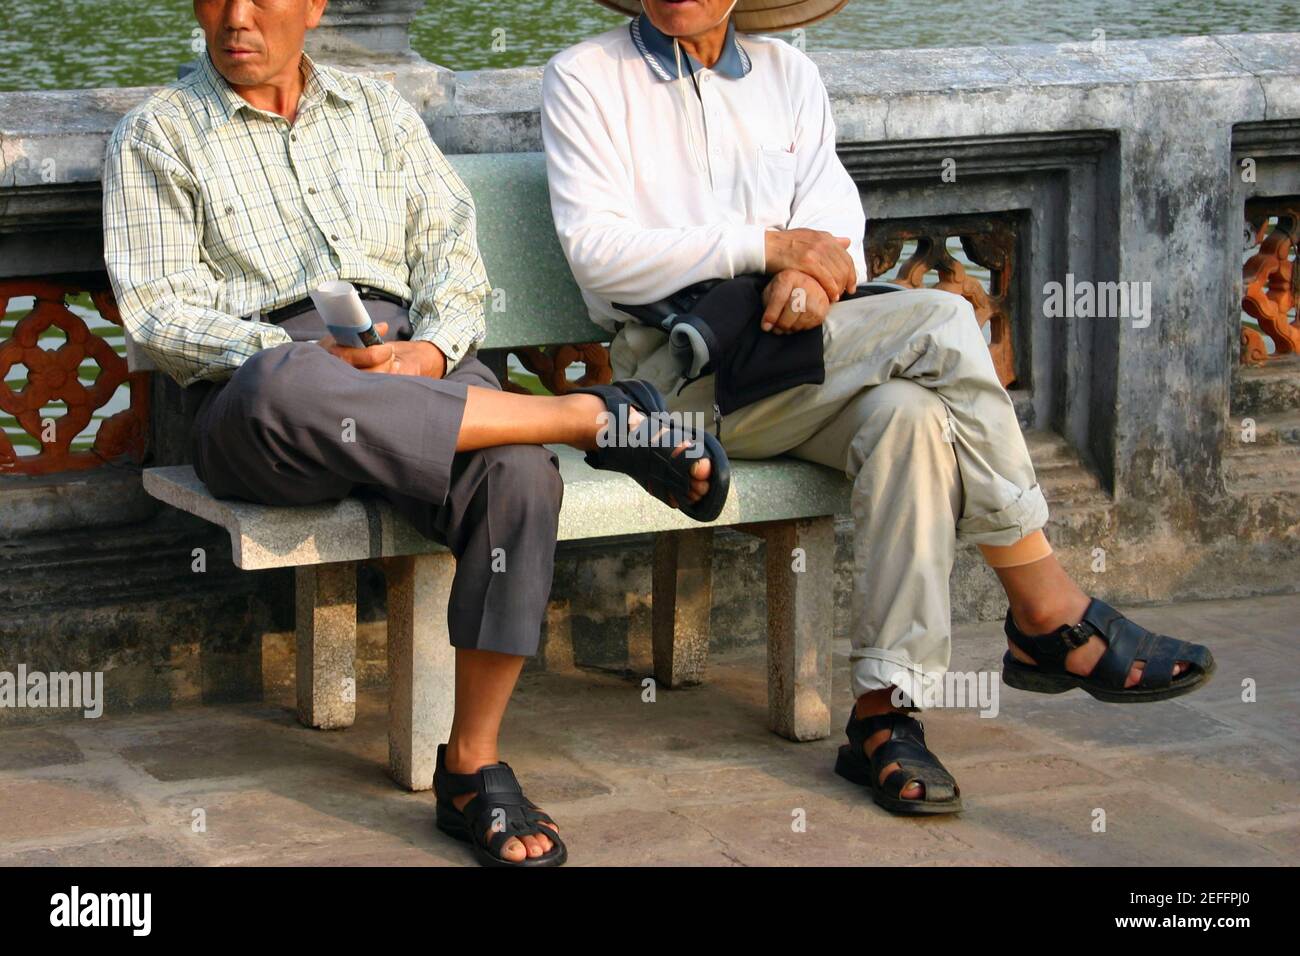 Two mature men sitting on a bench, Hanoi, Vietnam Stock Photo